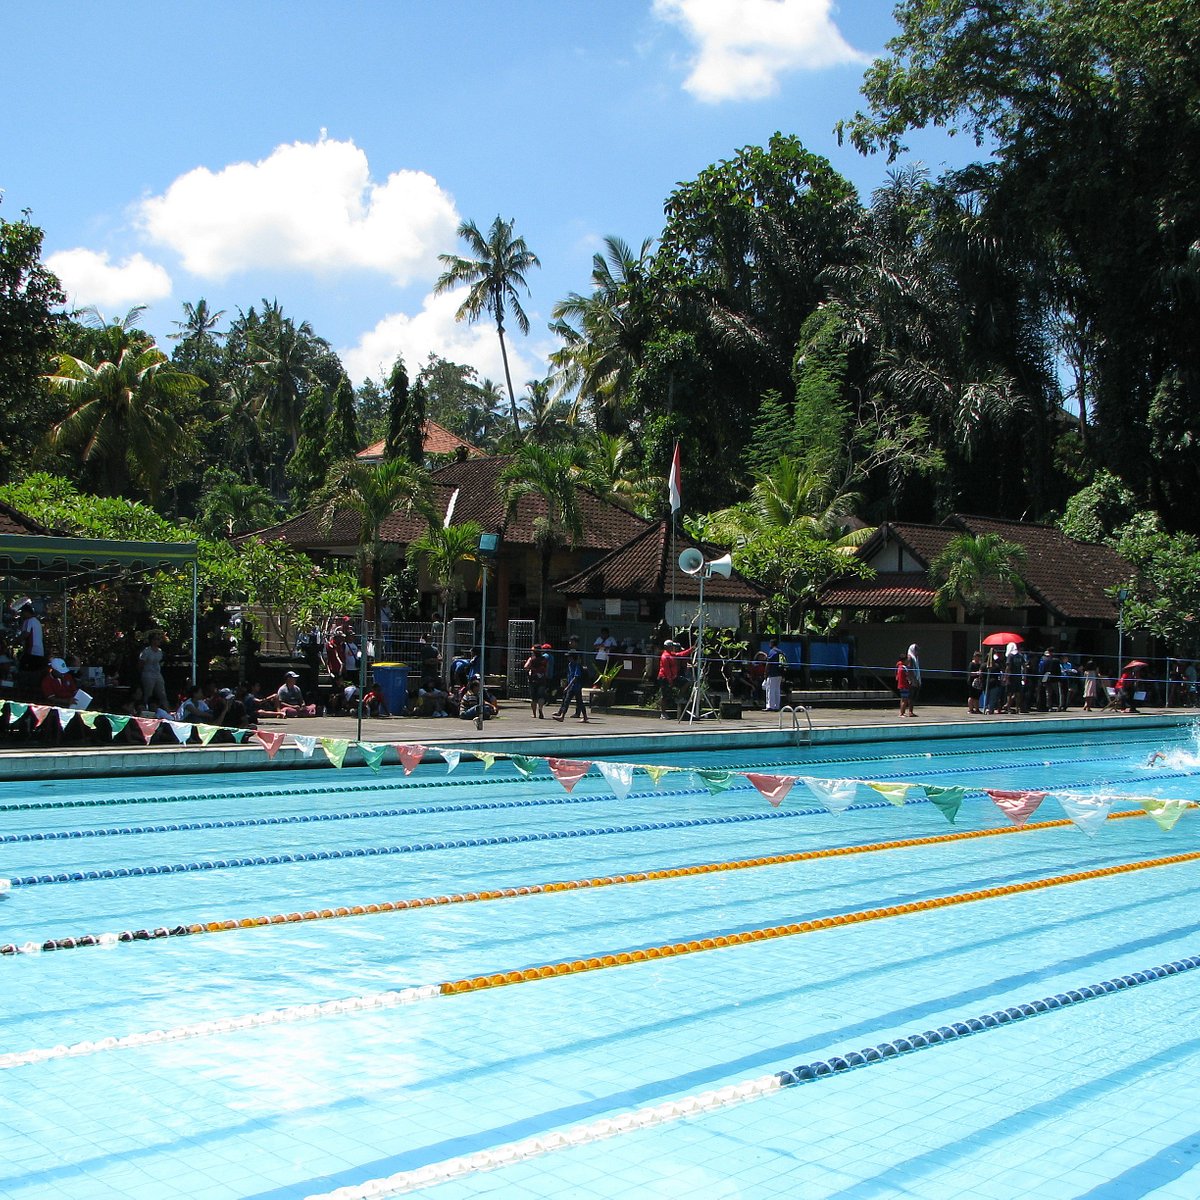 Public pool